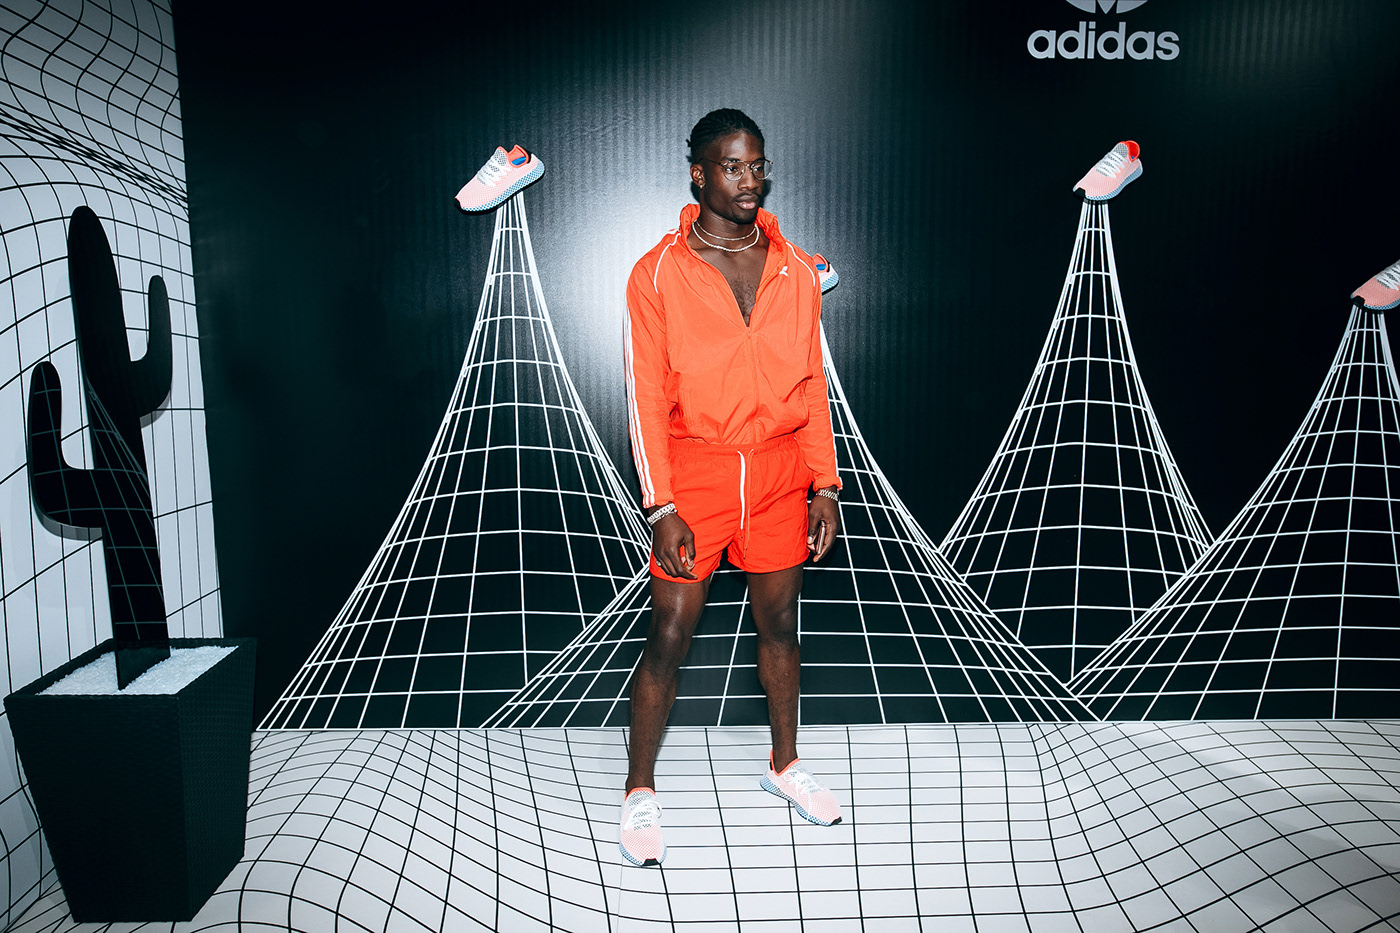 Adidas Optical illusions on Behance